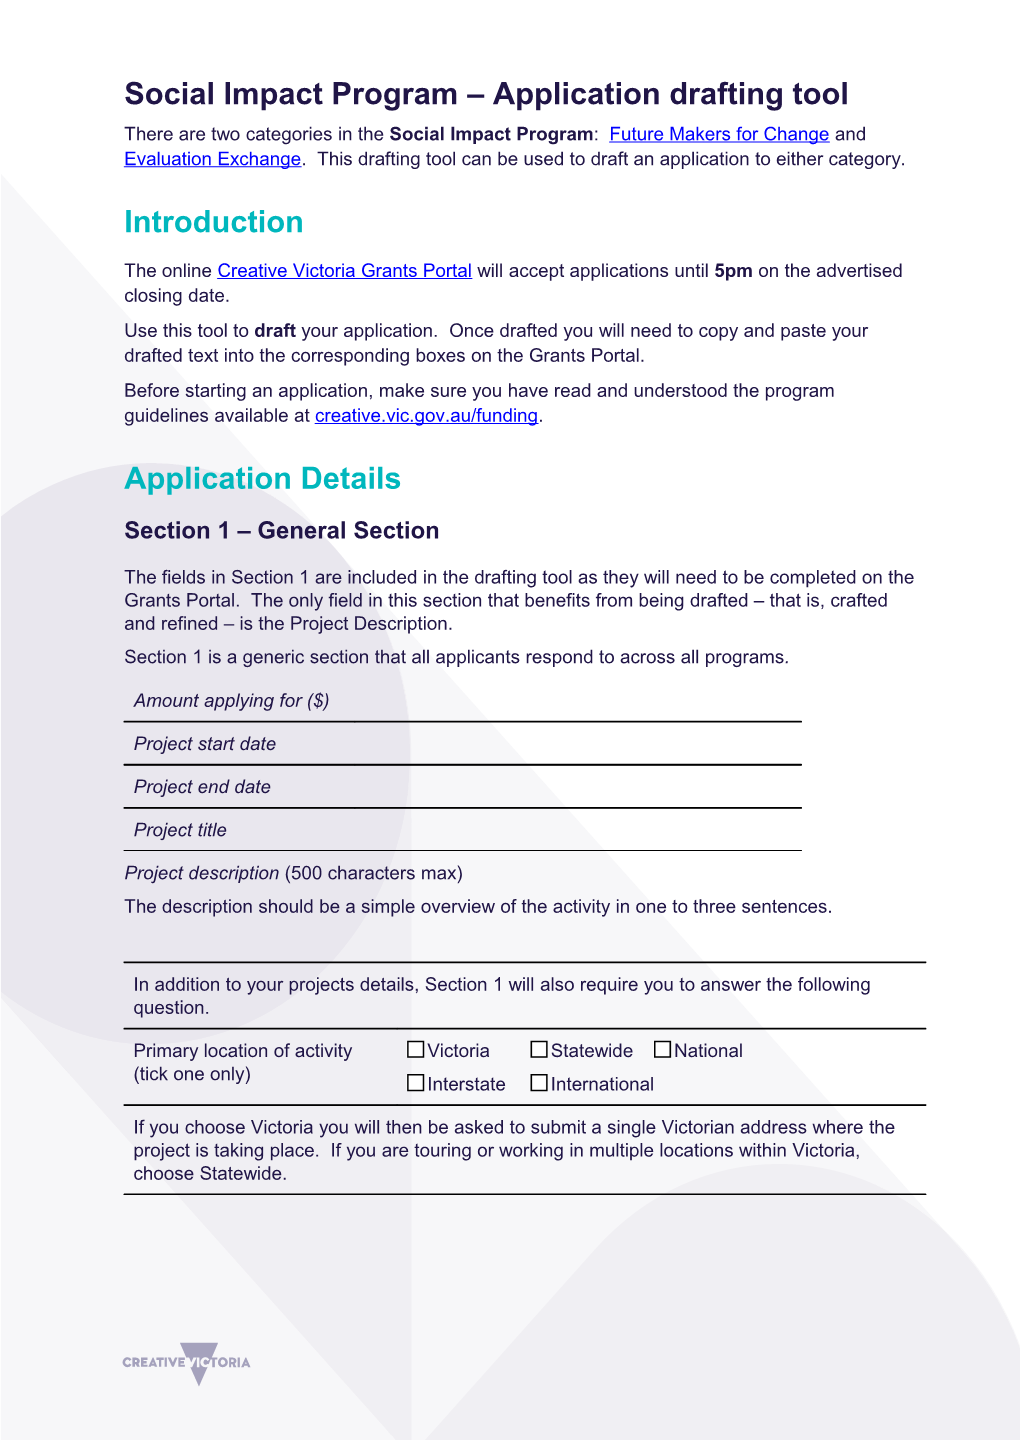 Social Impact Program Application Drafting Tool